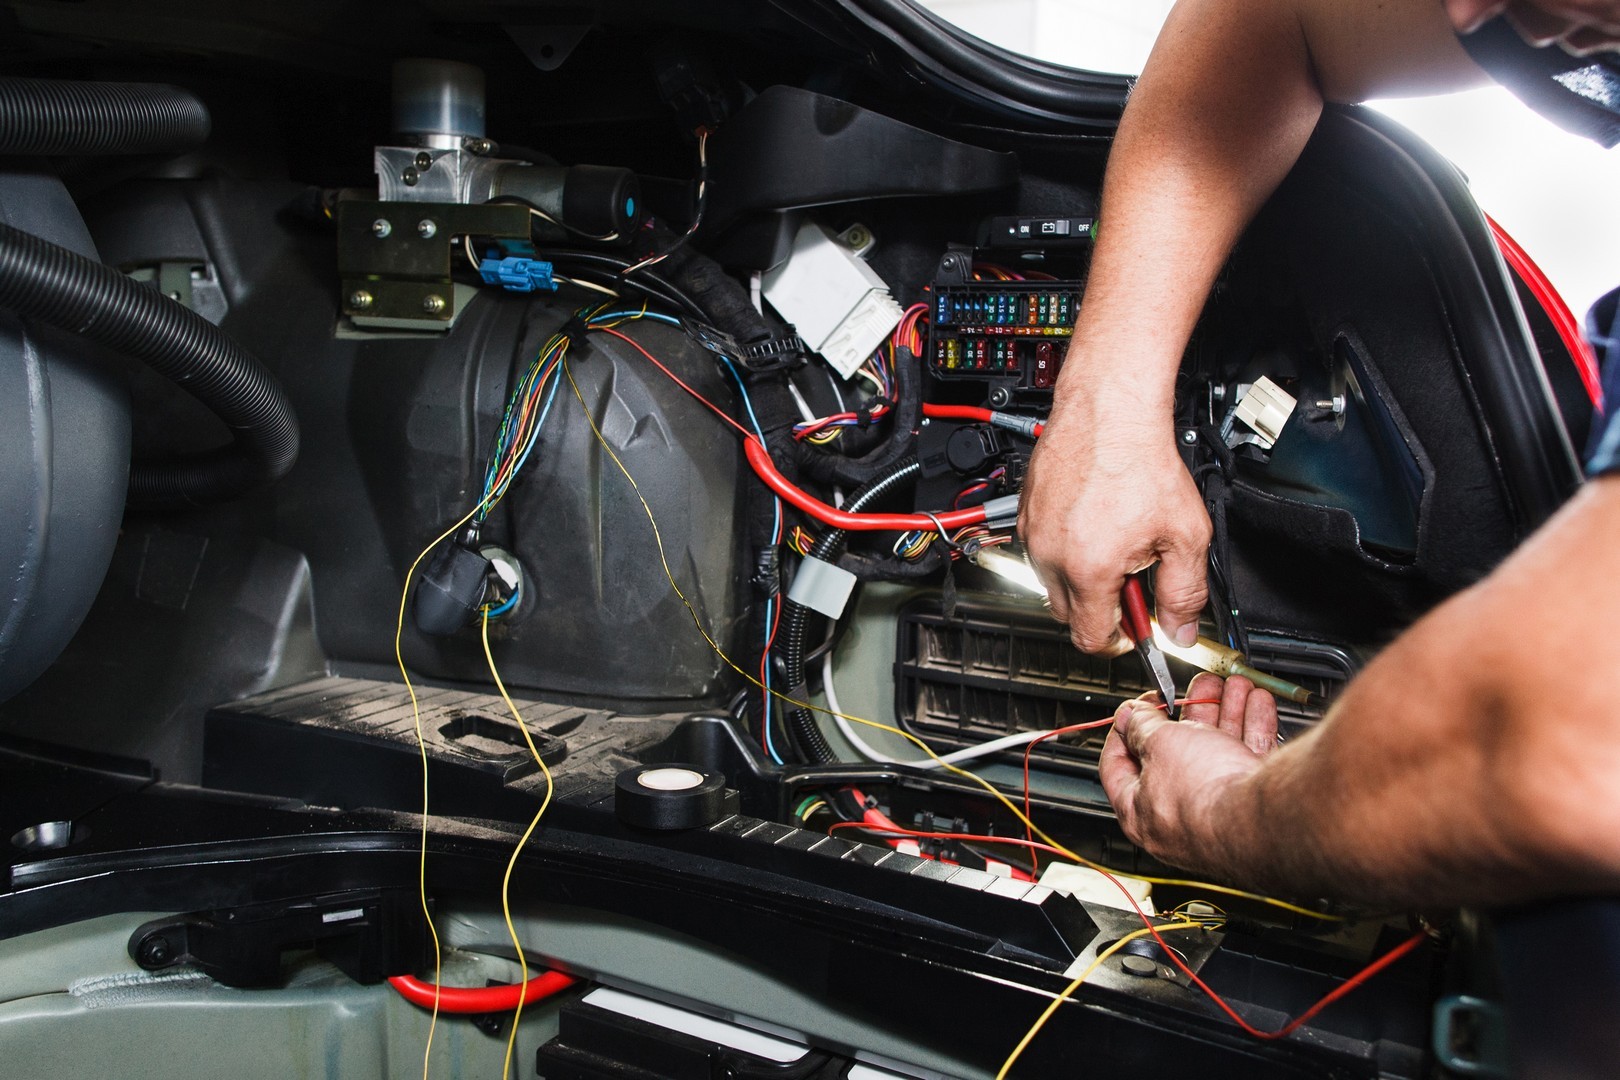 Technician Fixing The Cars Electronics